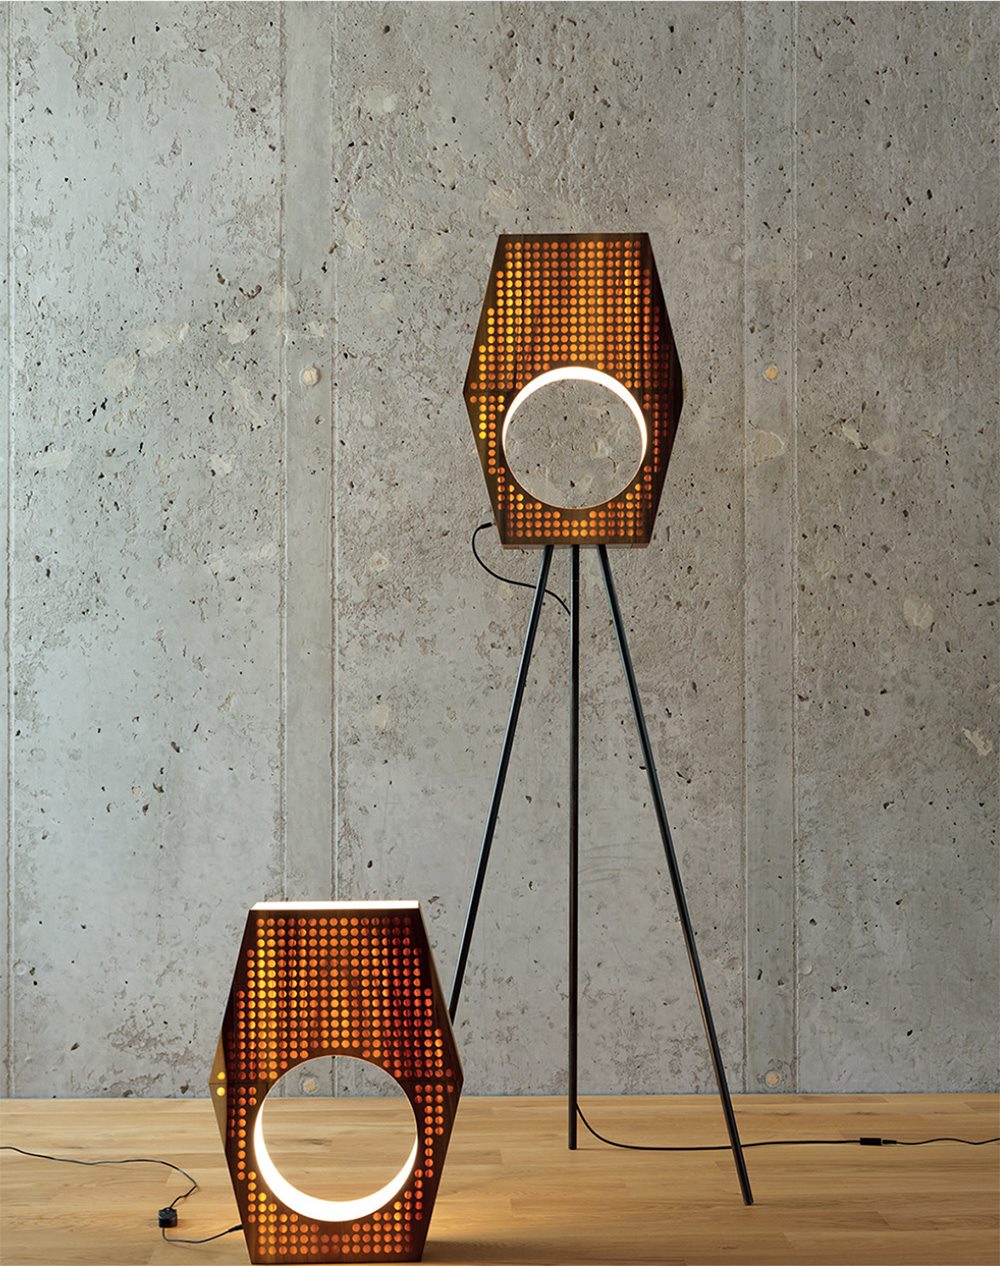 13&9 design - Wood Light (foto Paul Ott)